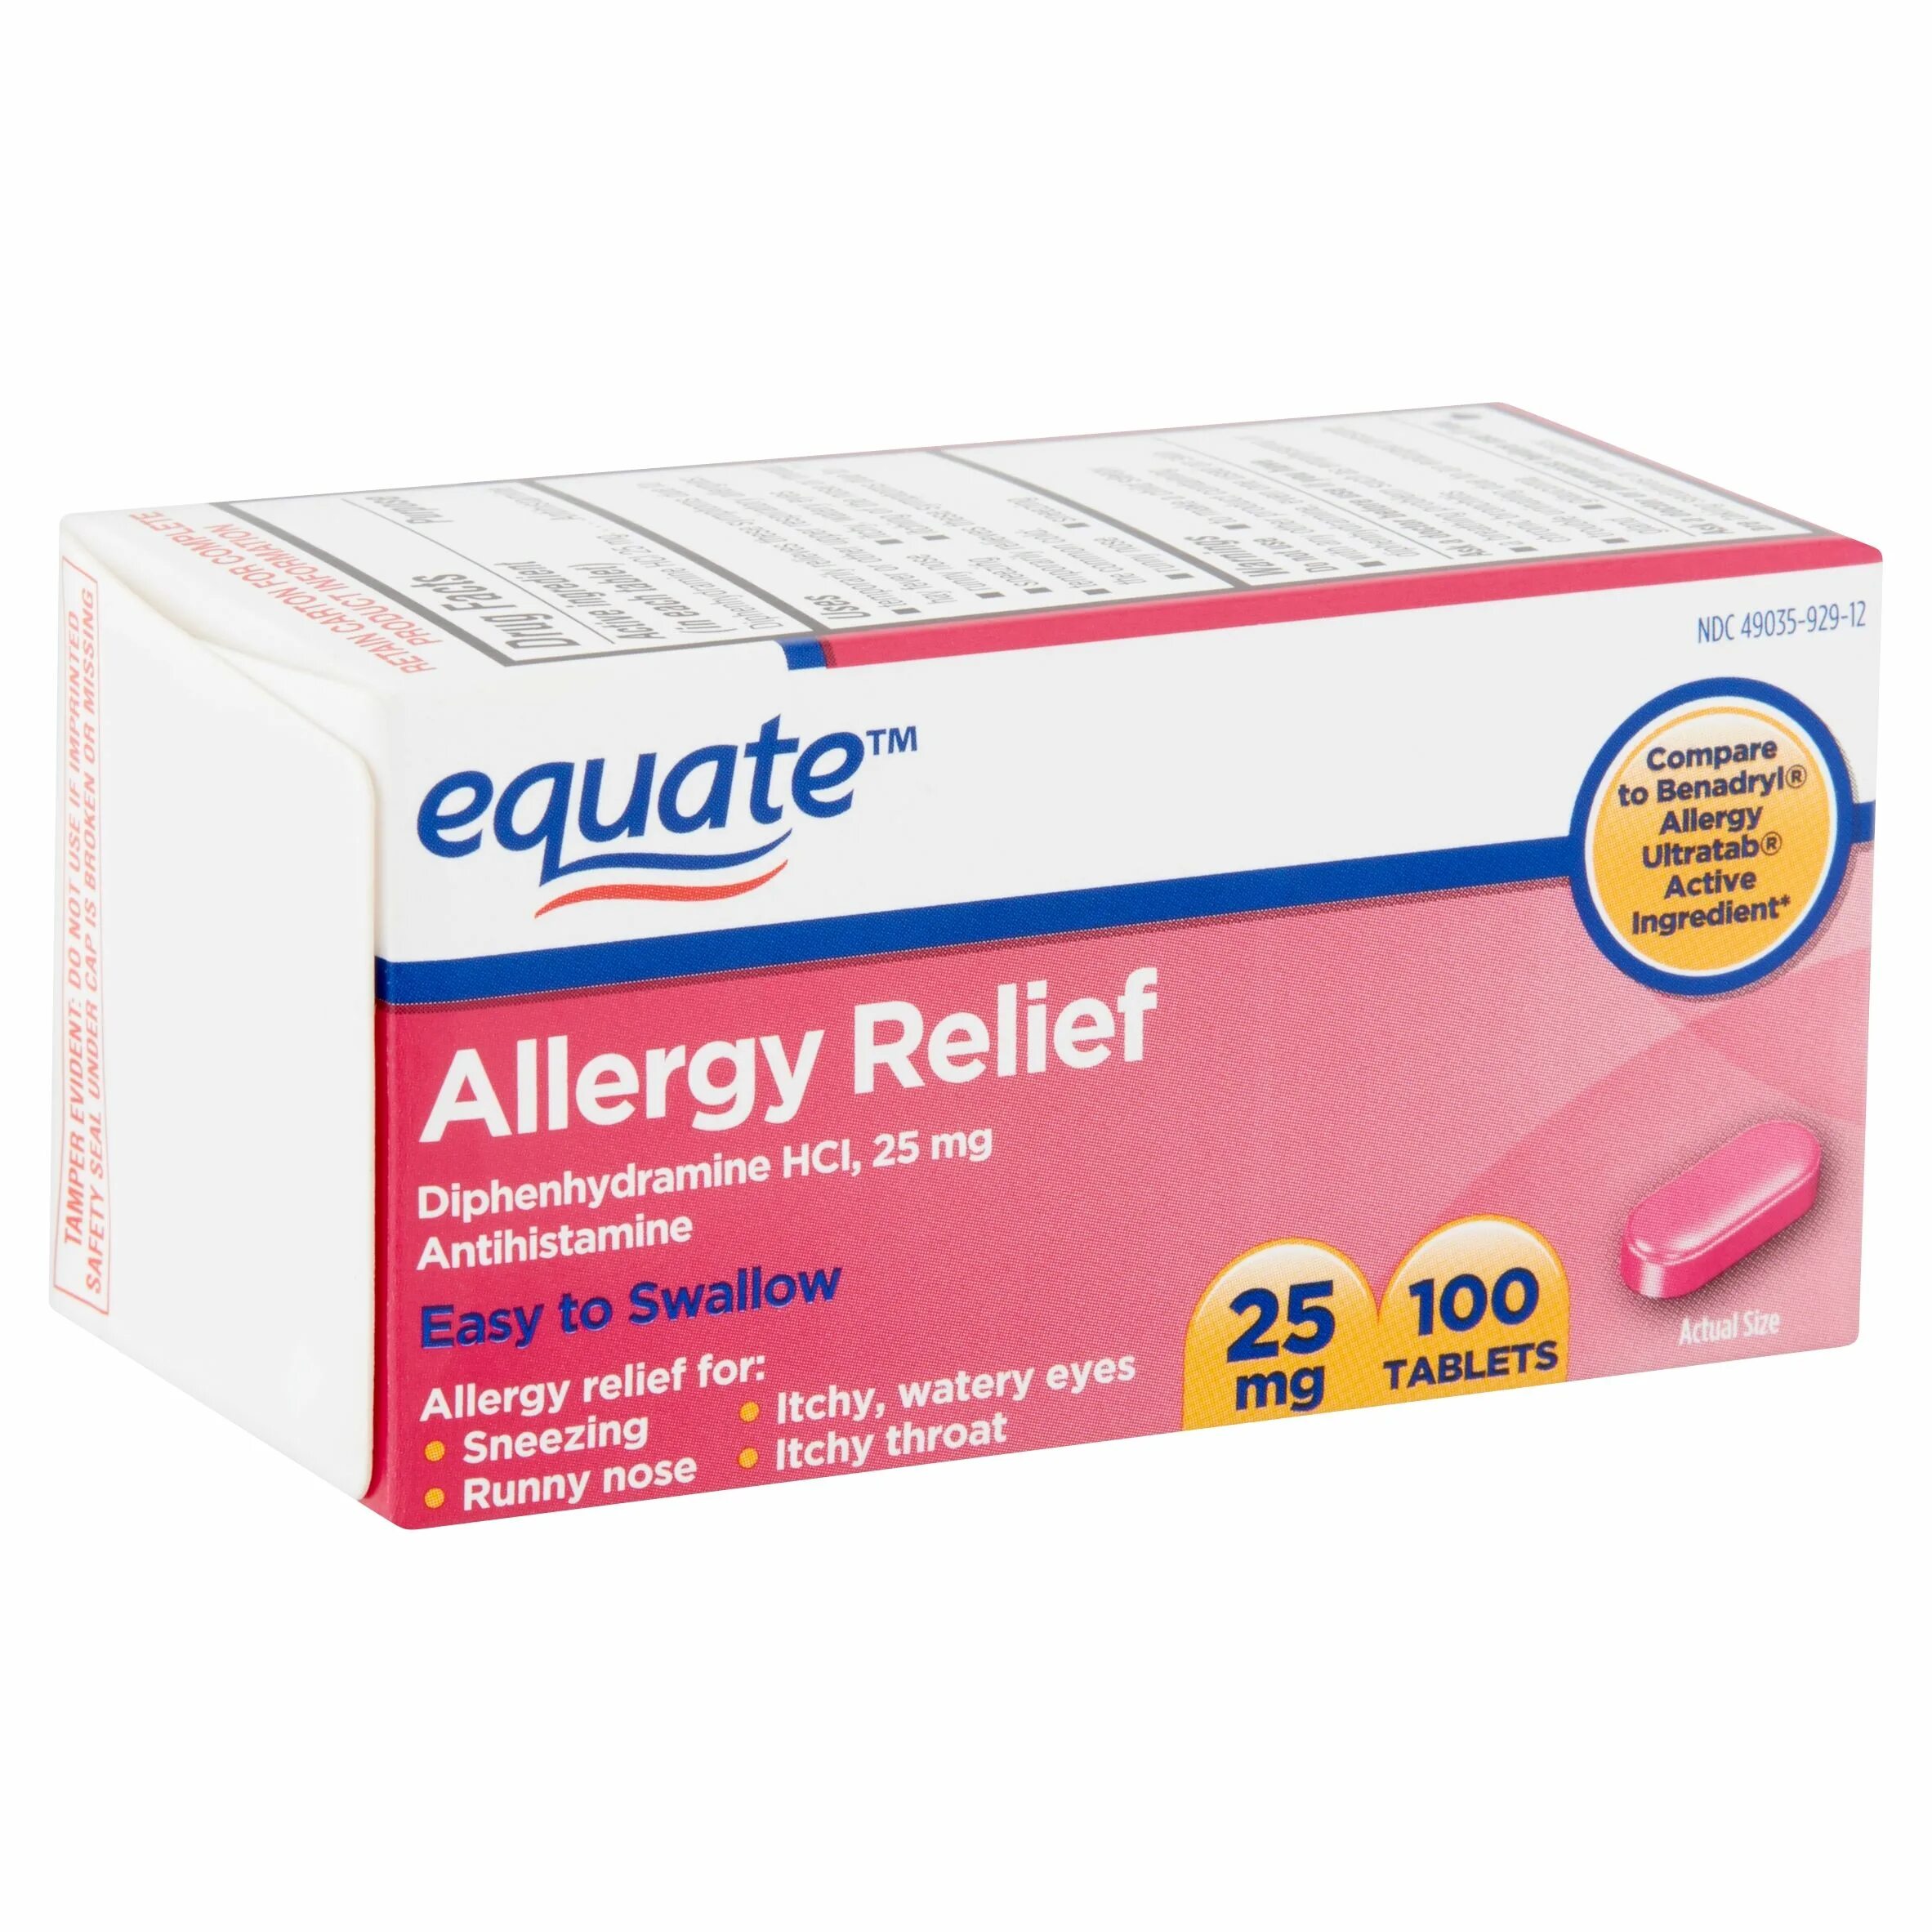 Equate Allergy Relief. Walmart Allergy Relief equate. Аллержи табс. Allergy таблетки.